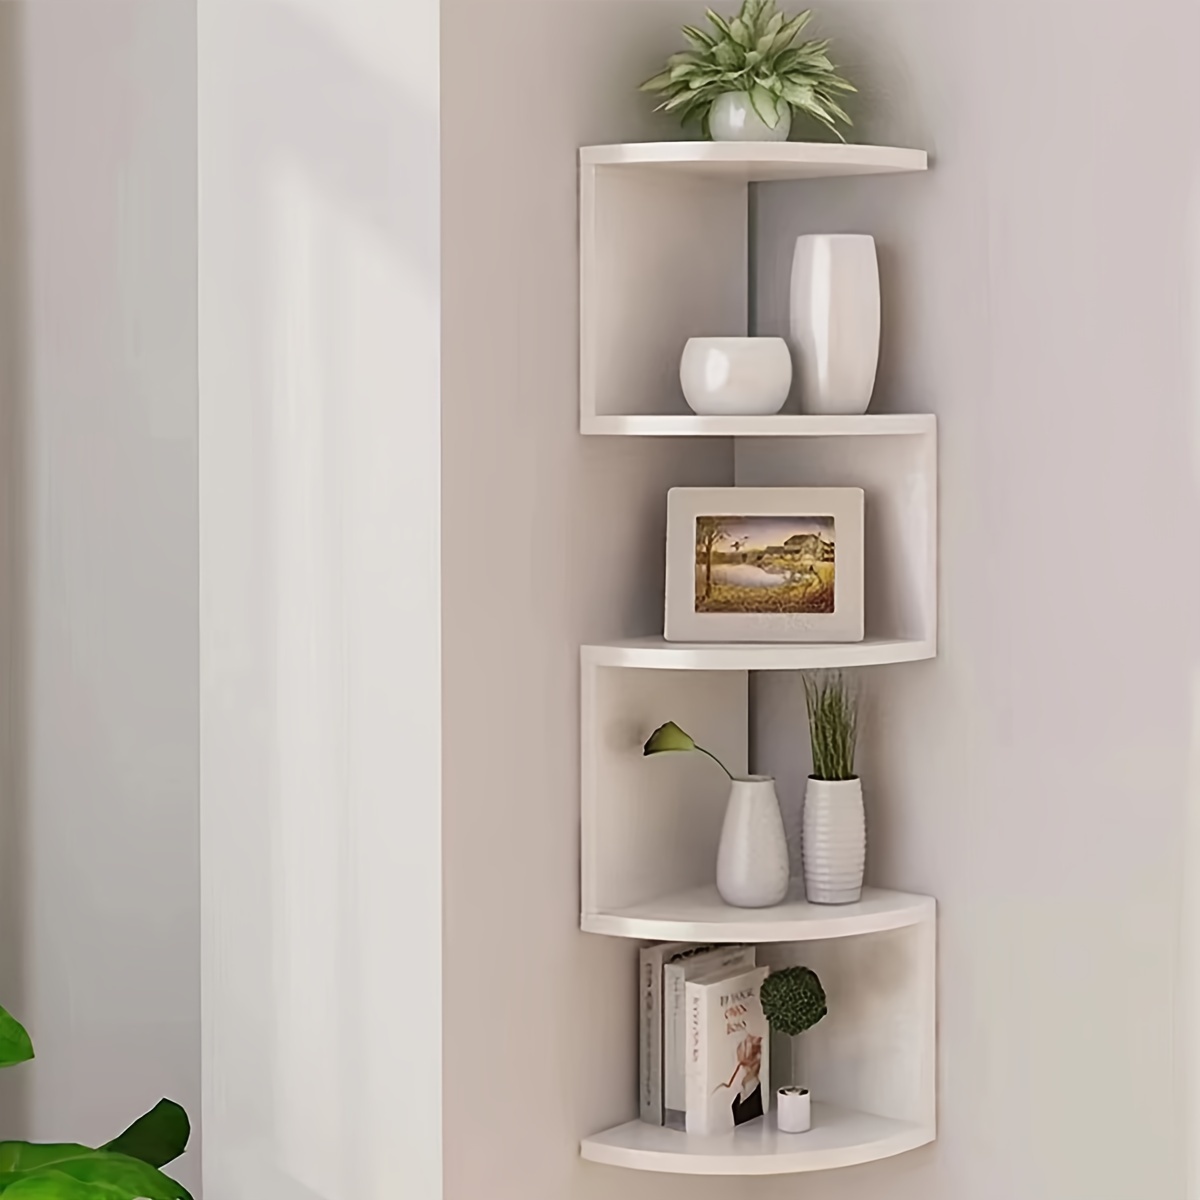 

5-tier Corner Wall Shelf - Contemporary Triangle Storage Rack For Books, Plants & Decor - Versatile Home Organizer For Living Room, Bedroom, Bathroom